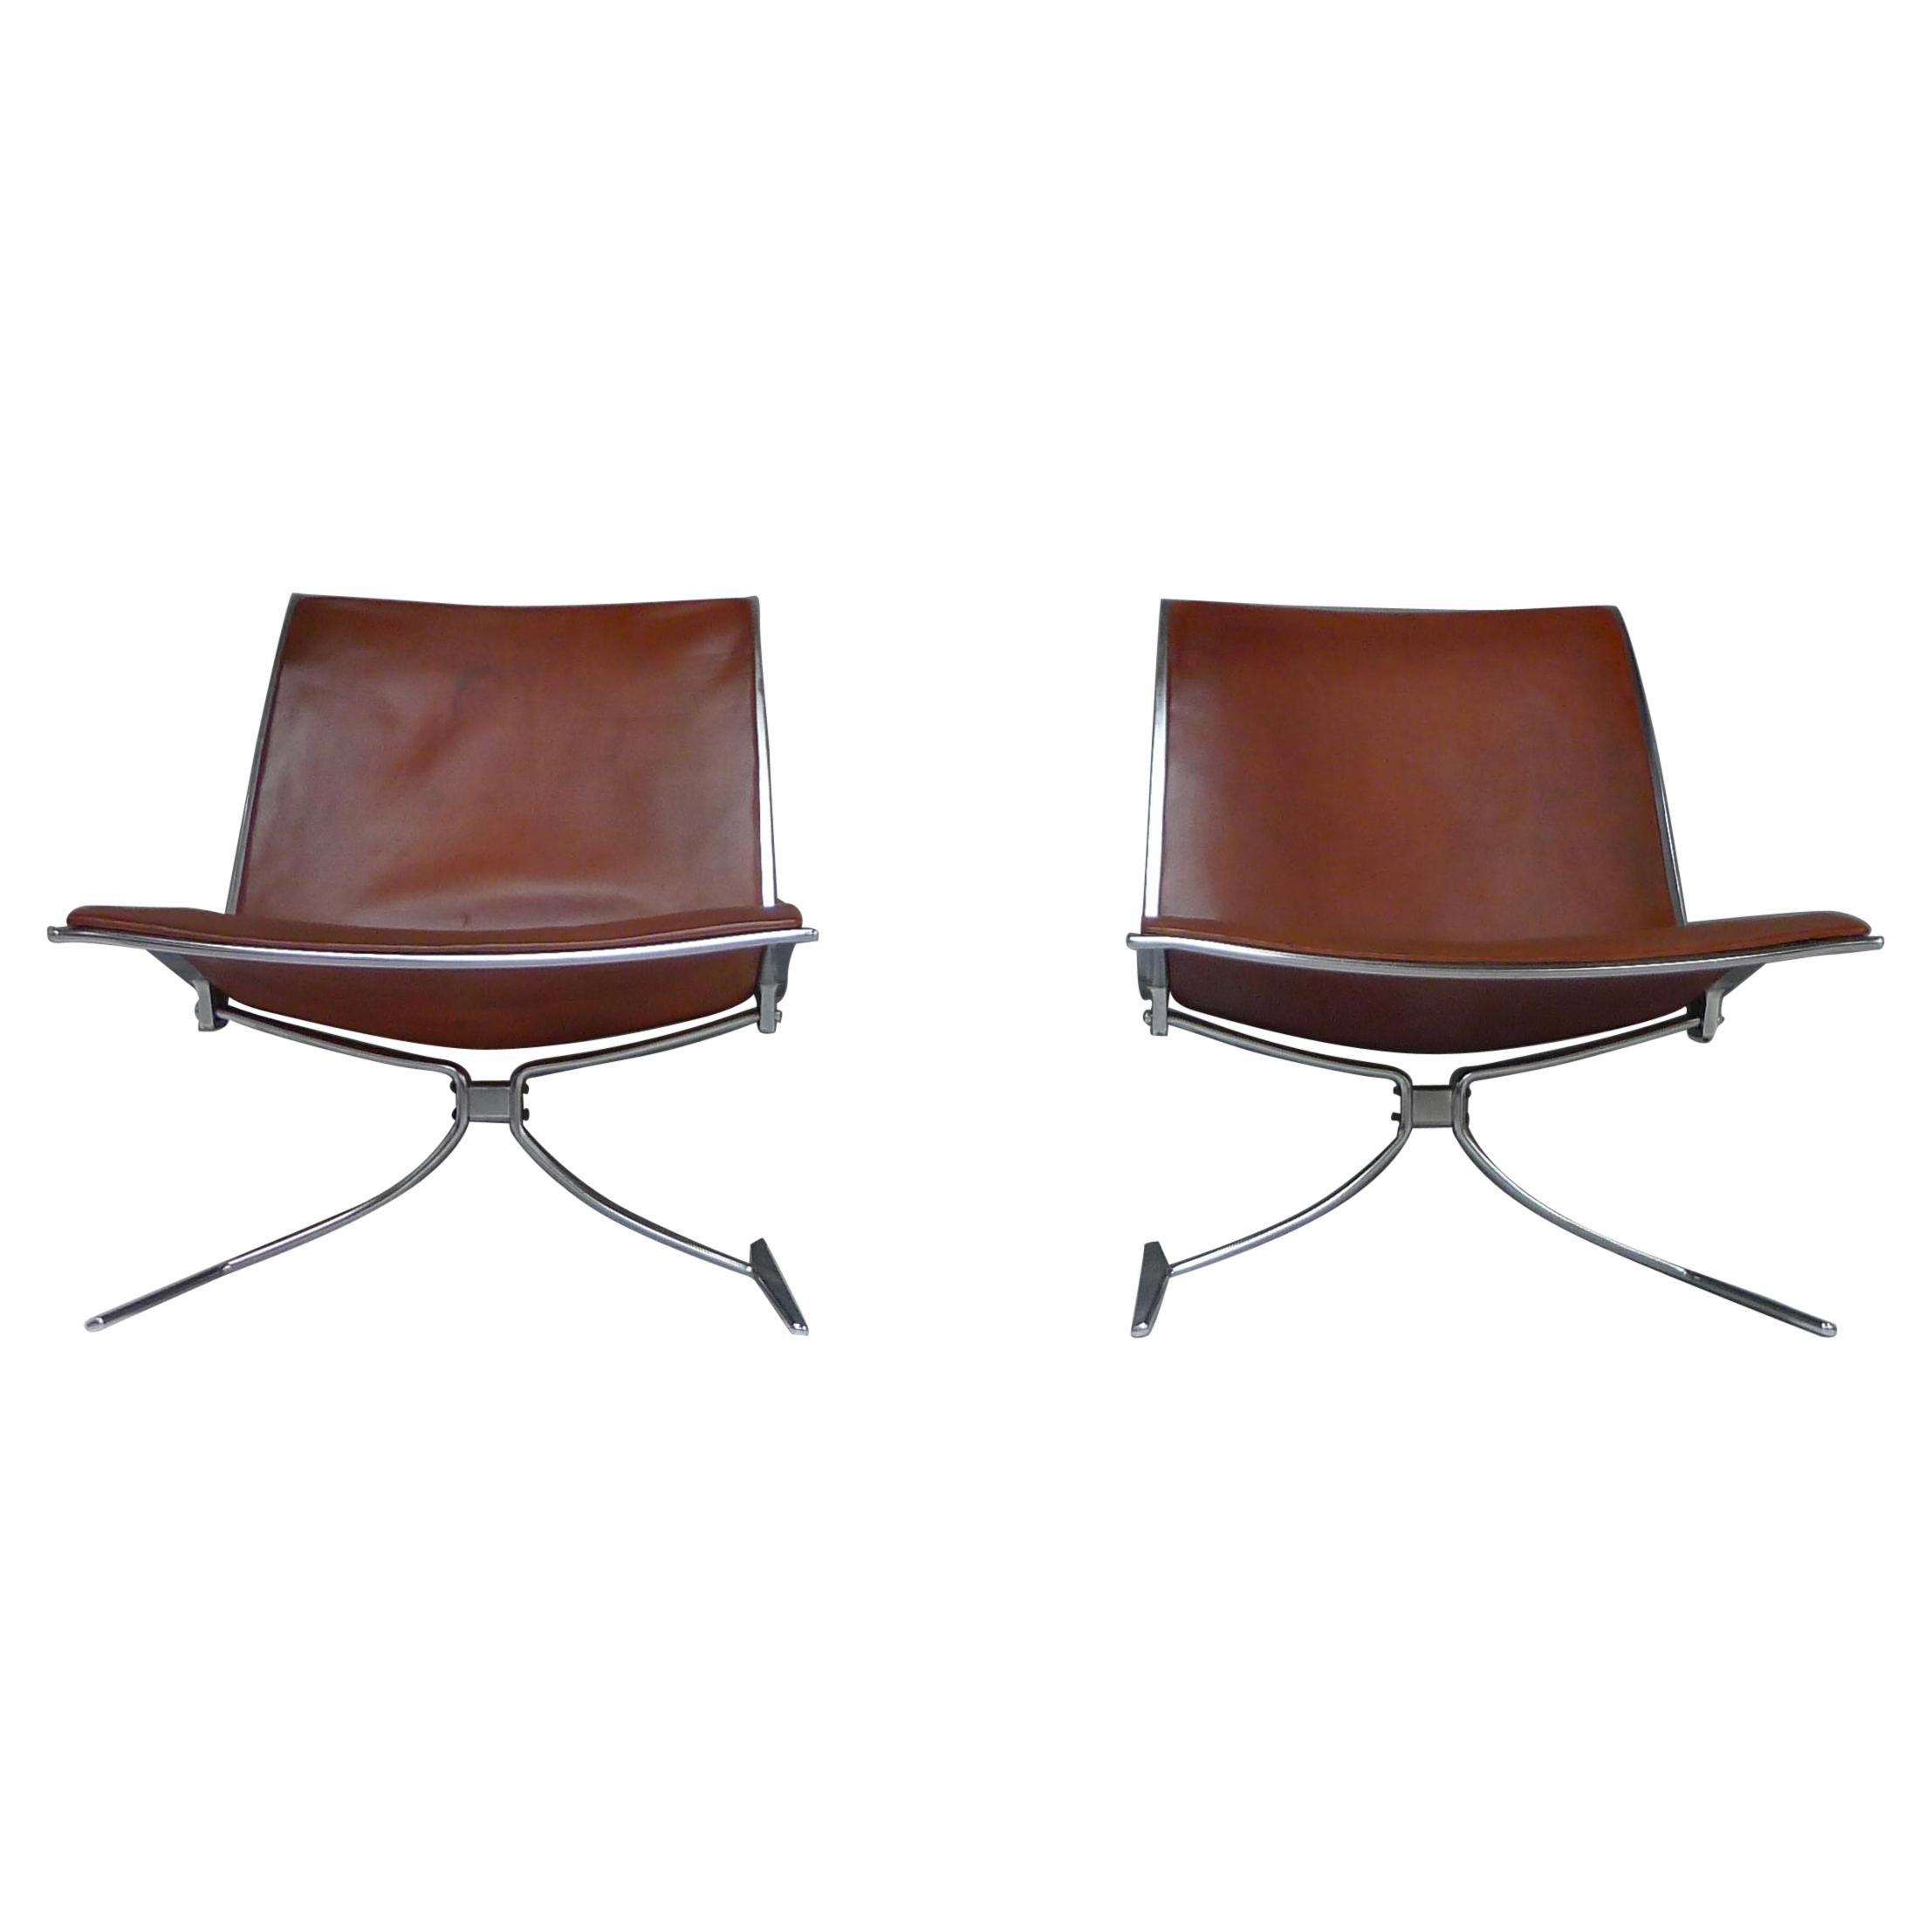 Fabricius & Kastholm, Pair of Skater Chairs in Original Cognac Leather, 1968